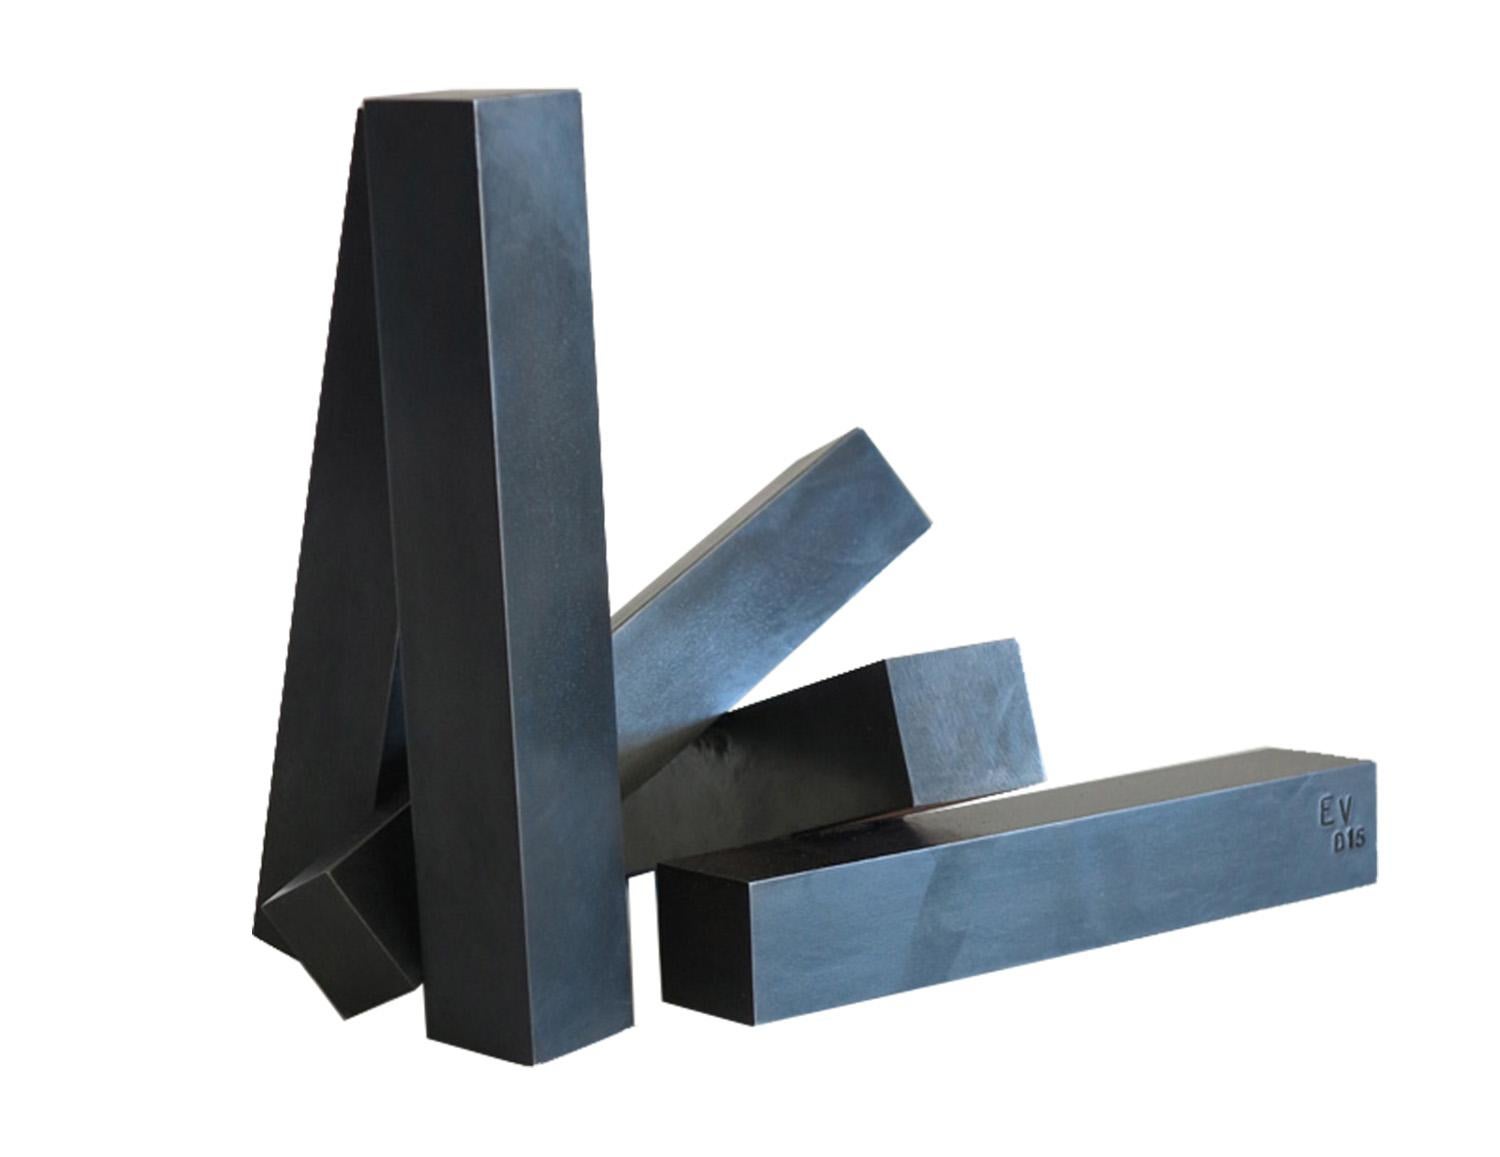 Etienne Viard Abstract Sculpture - 5 Barres